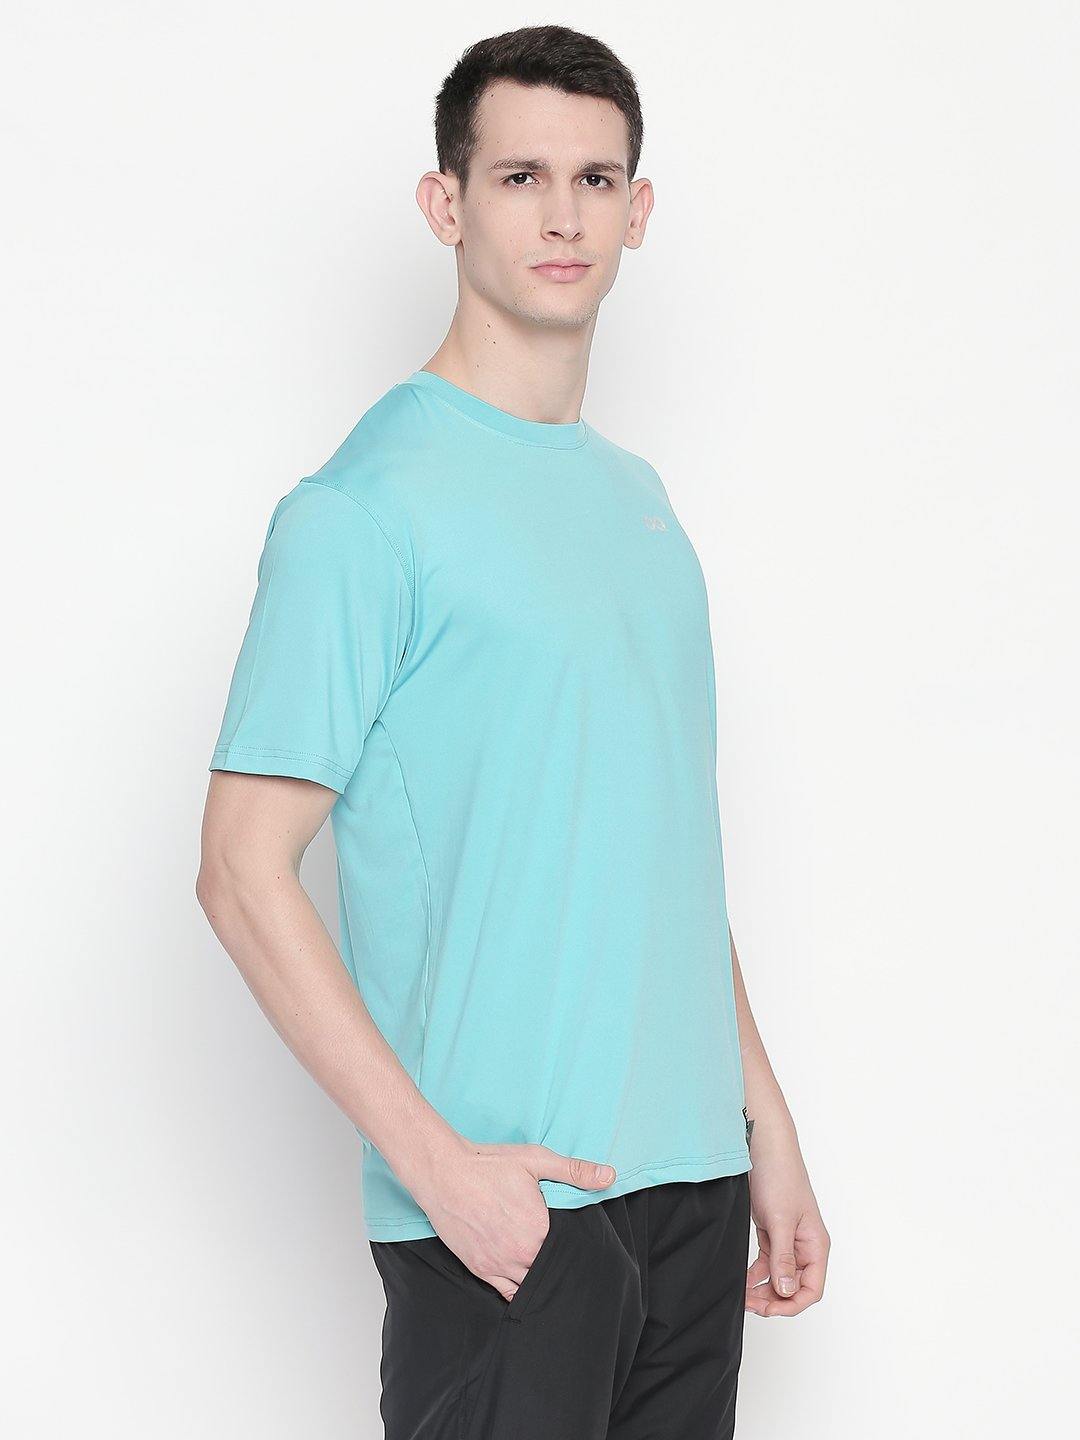 Buy Aqua Blue Shirts for Men by NETPLAY Online